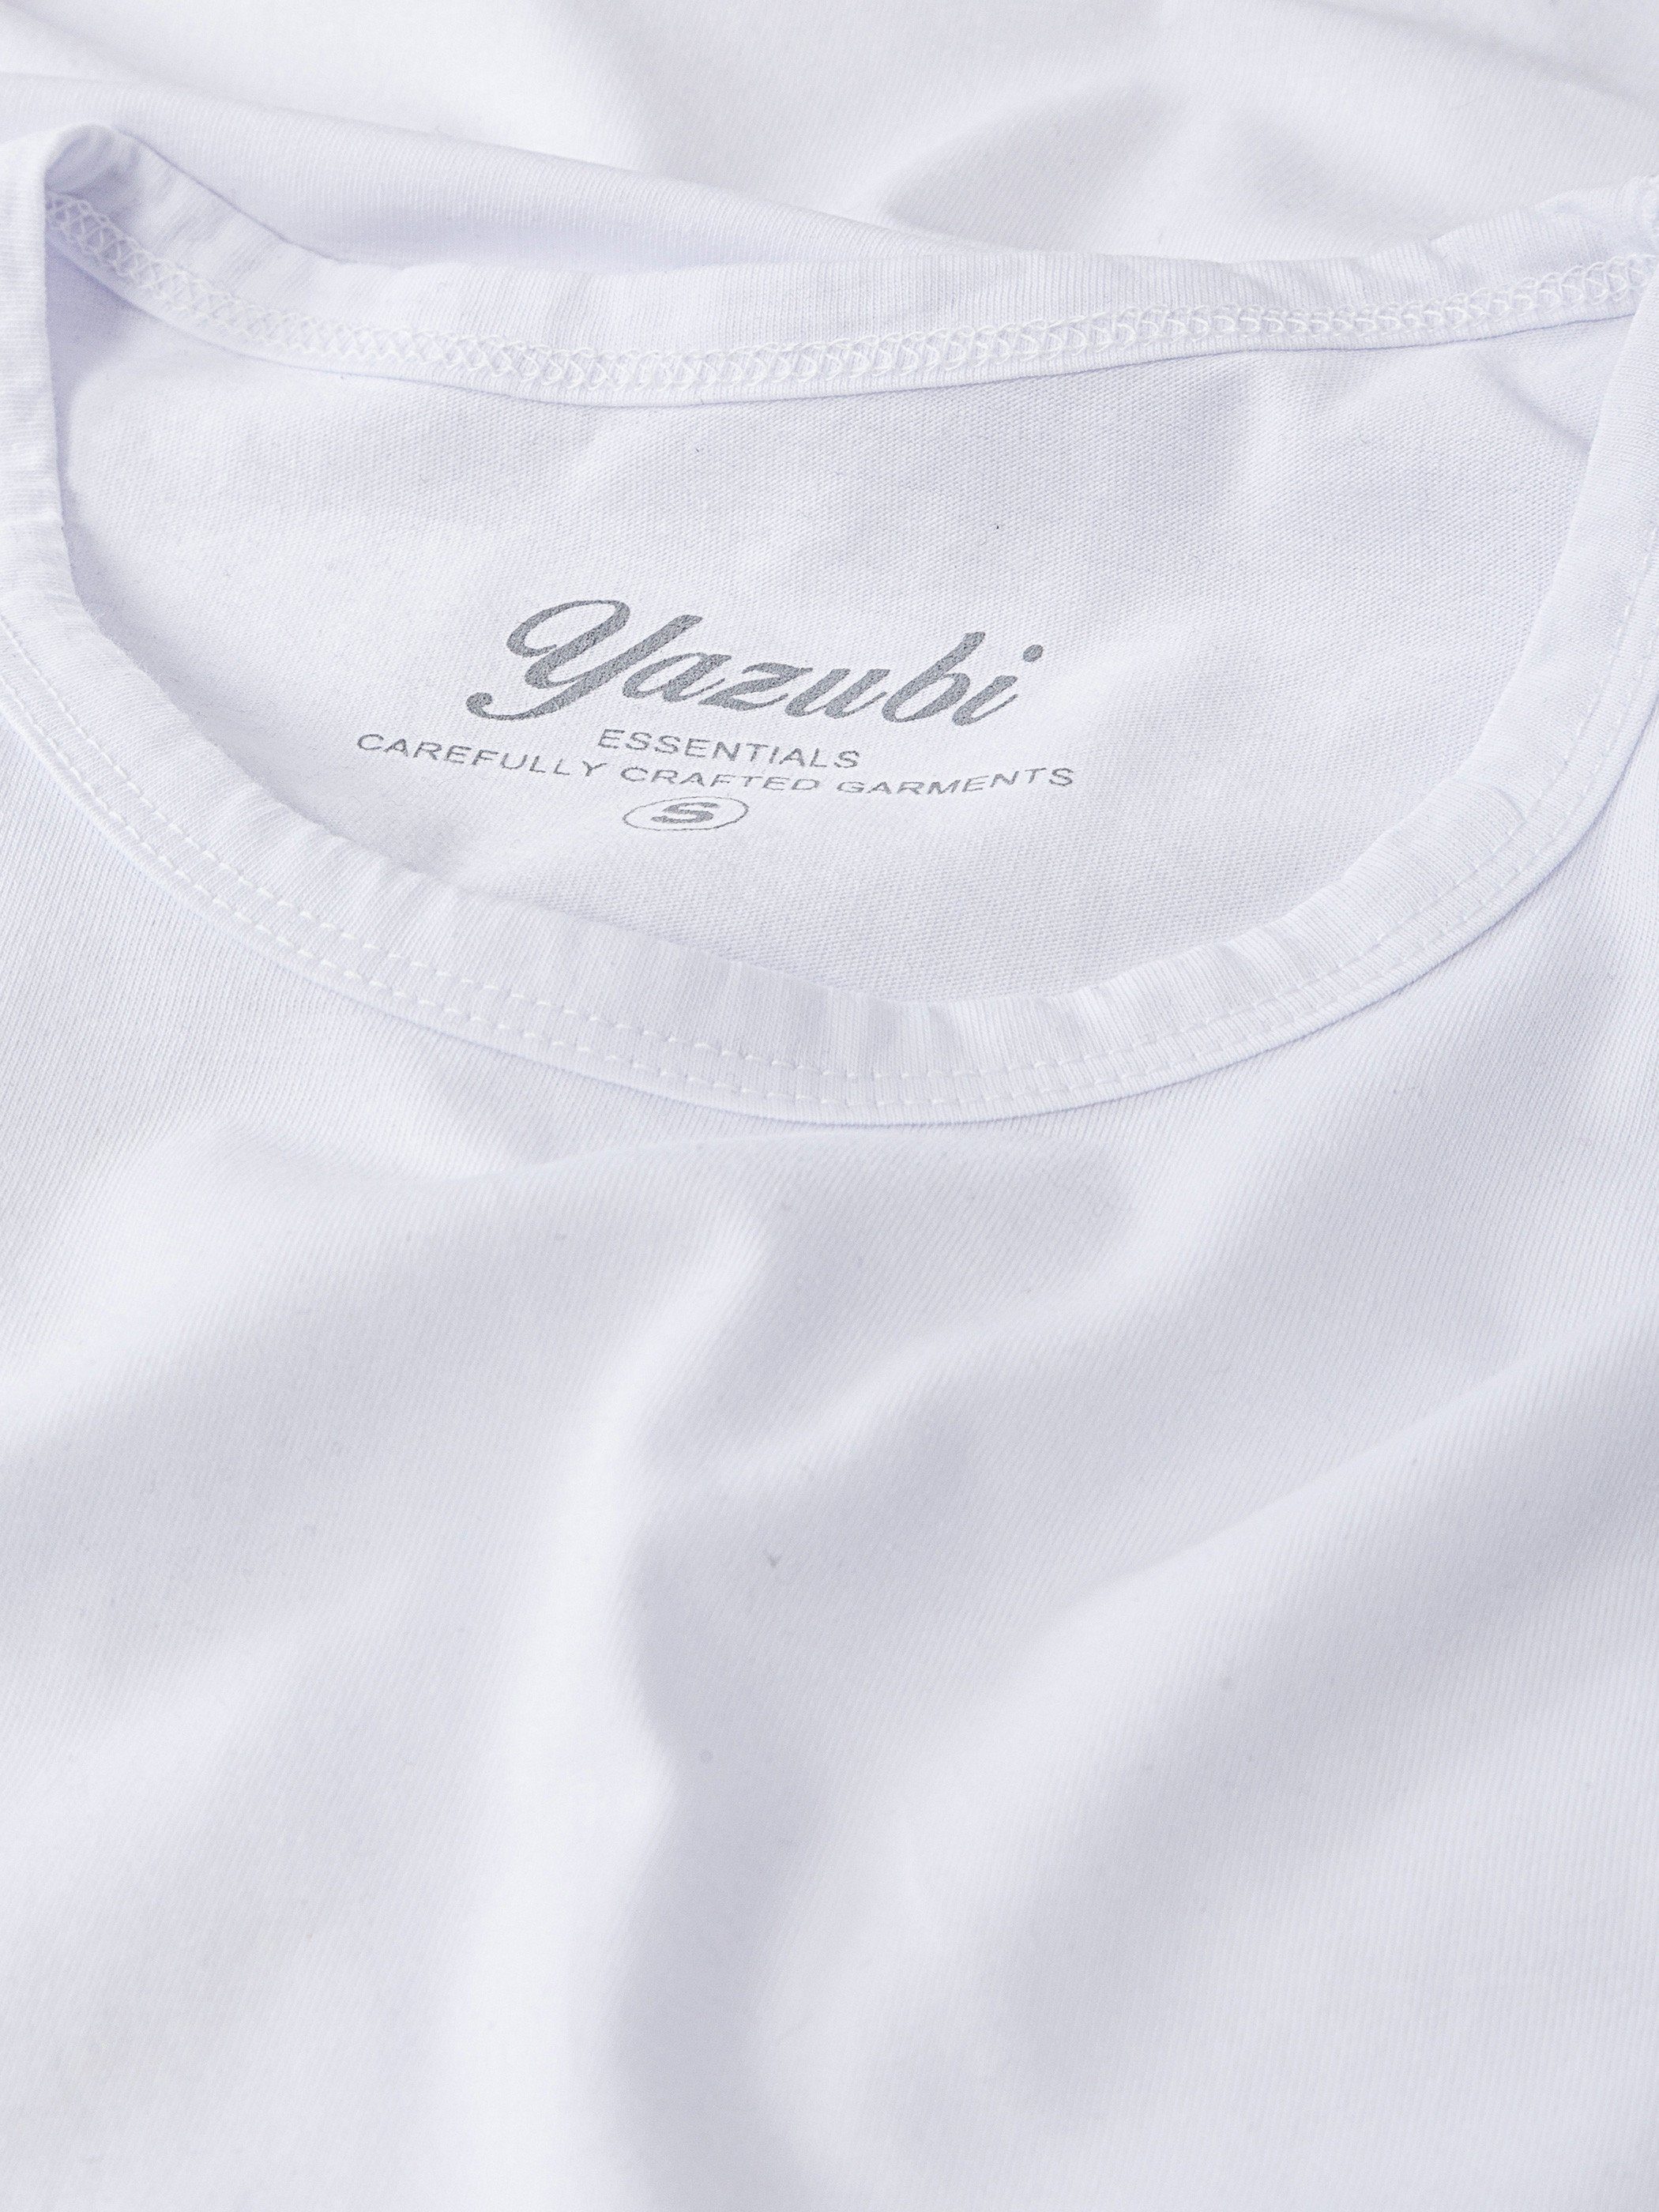 Yazubi T-Shirt Max 110601) Weiß Shaped Long (Set, 3-Pack Tee white modernes Rundhalsshirt (bright 3er-Pack)